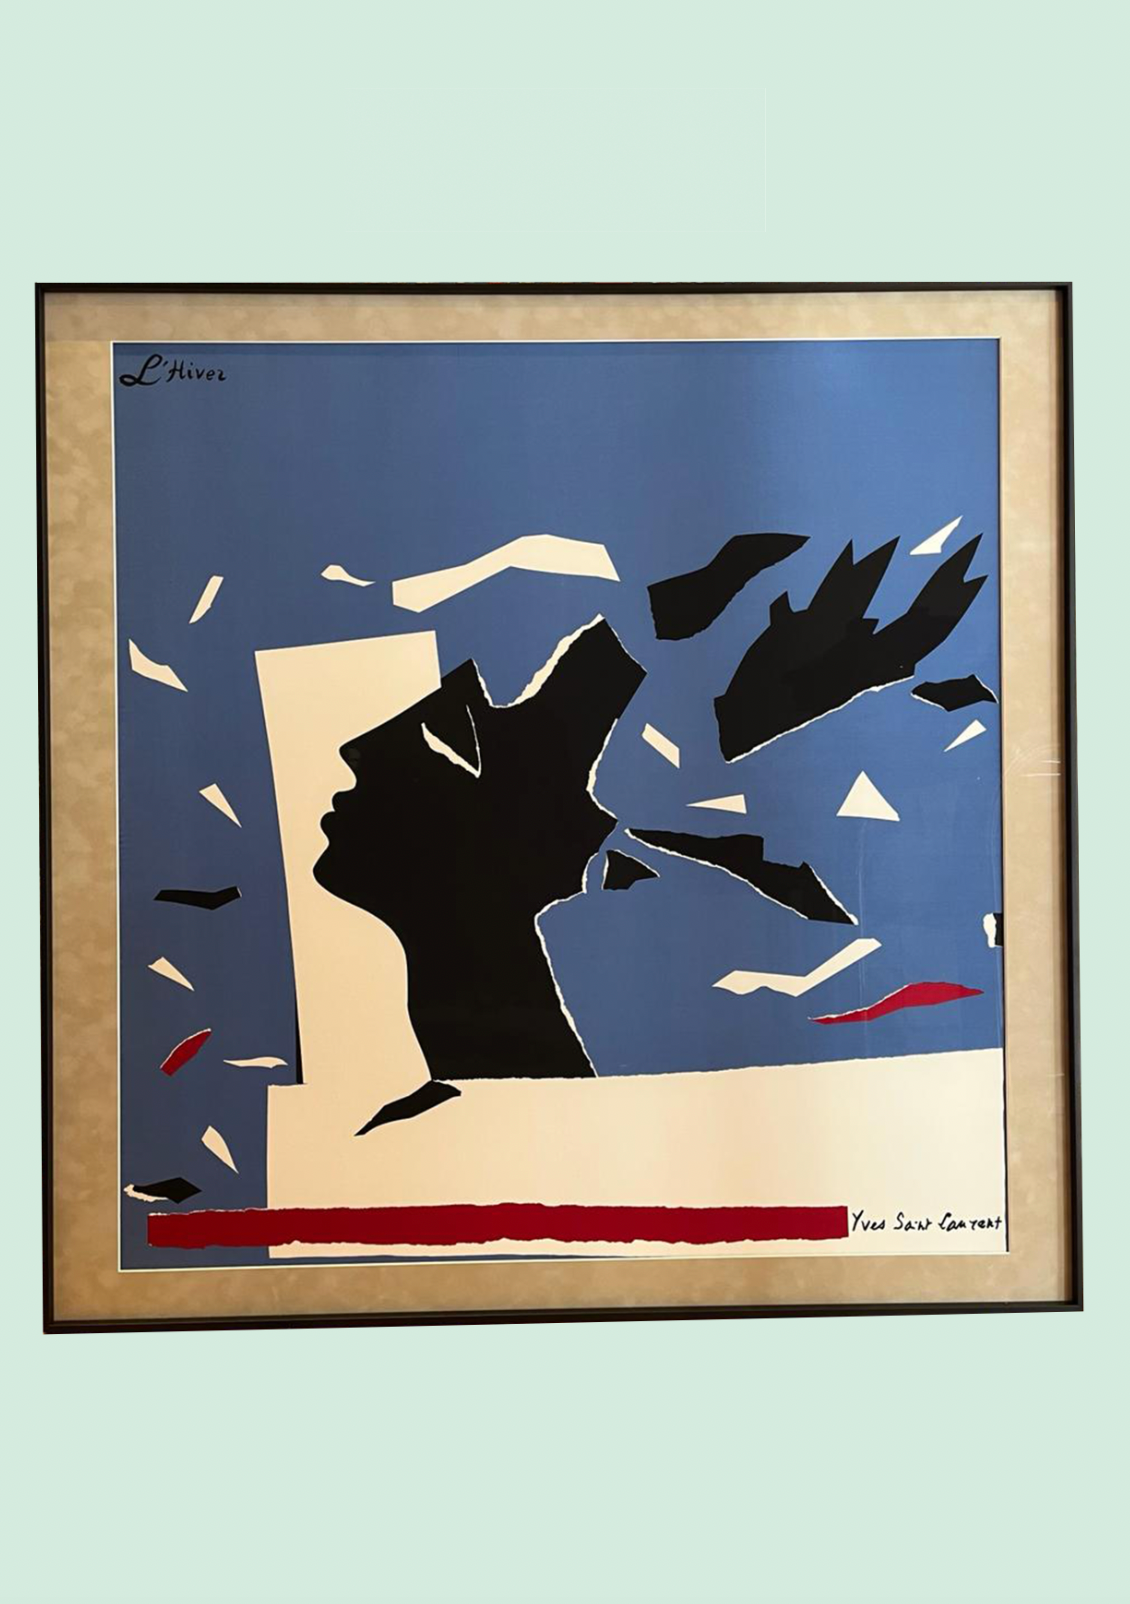 Vintage Yves Saint Laurent artwork